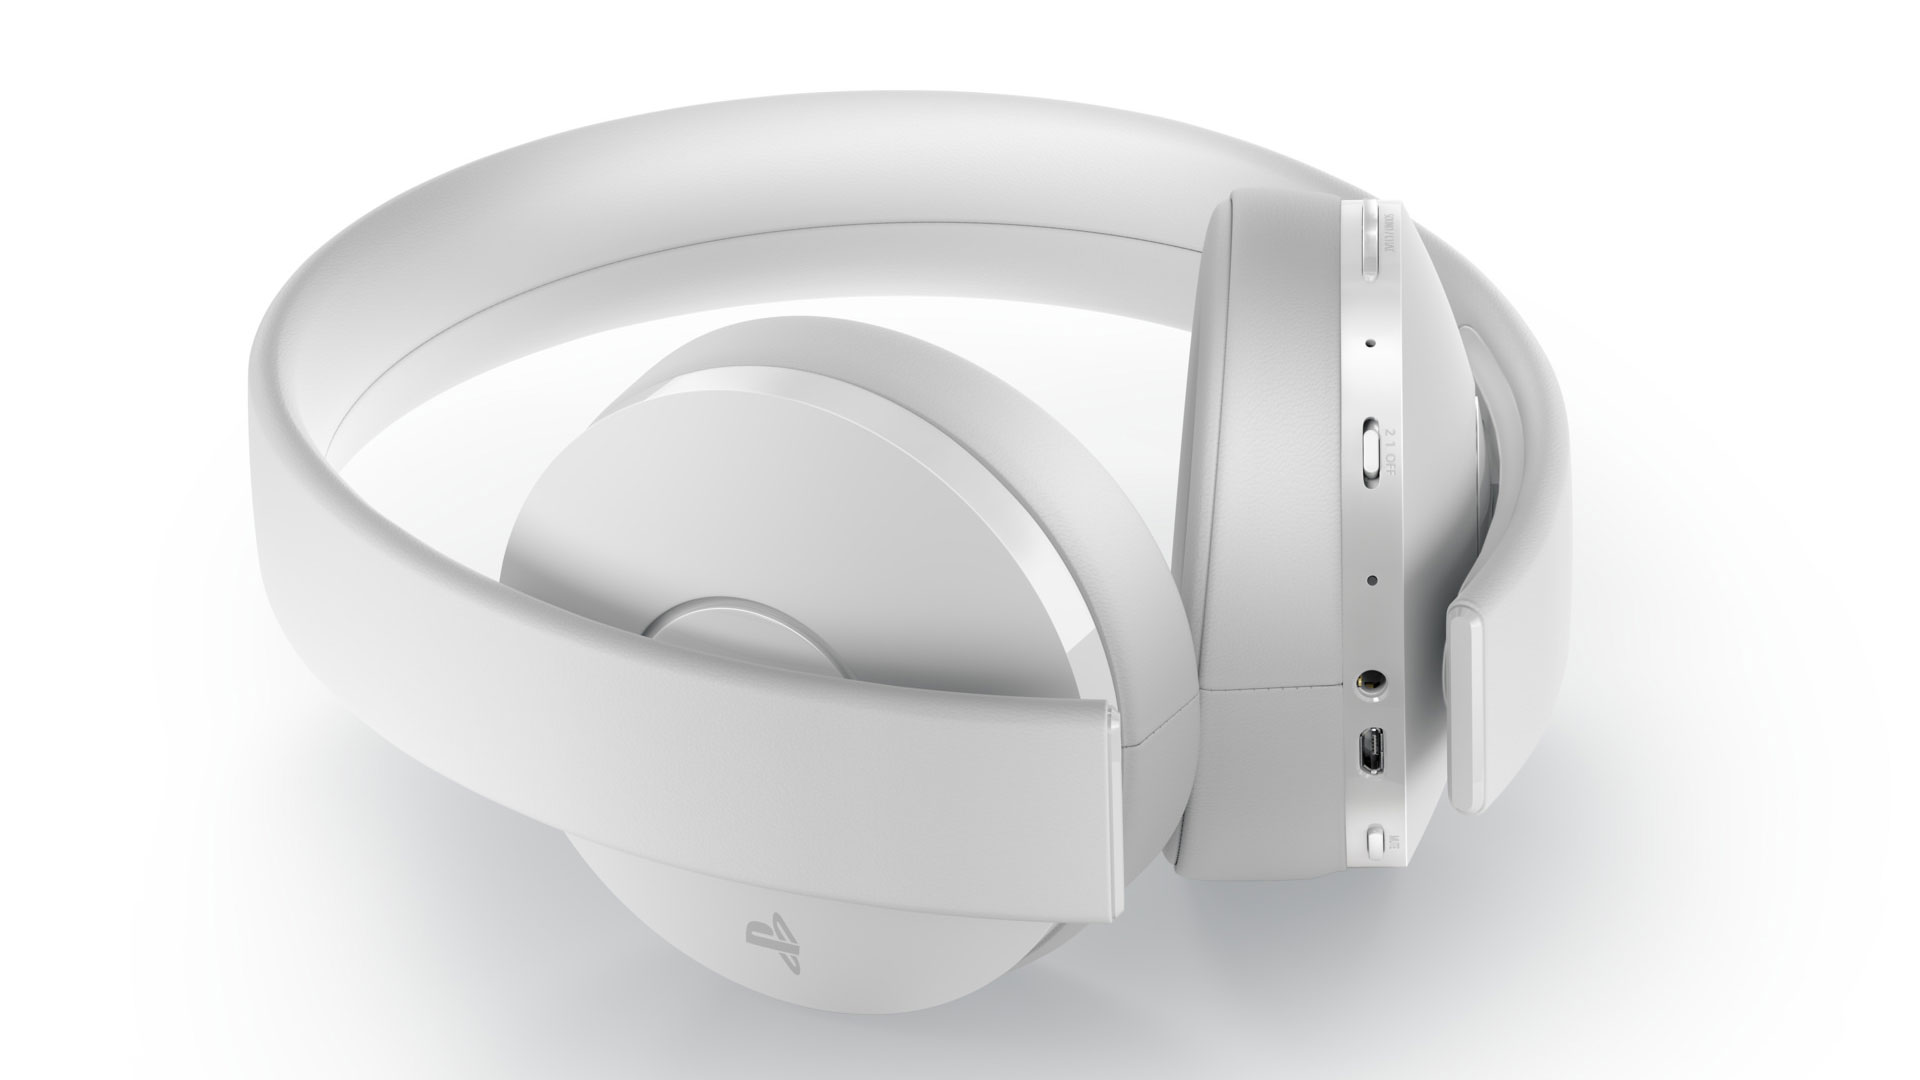 ps4 wireless headset white